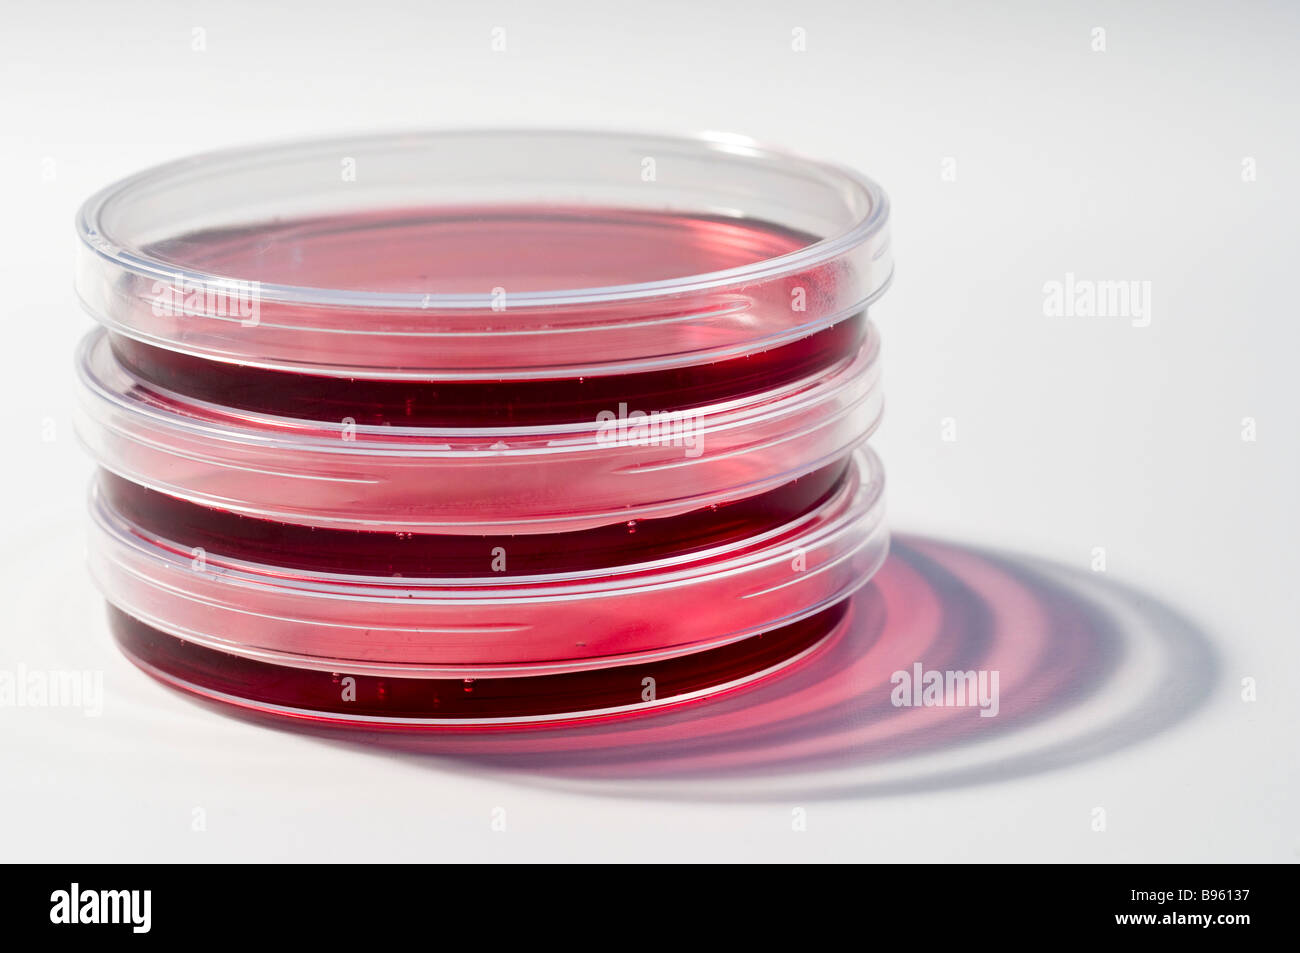 Colture di cellule in piastre di Petri Foto stock - Alamy